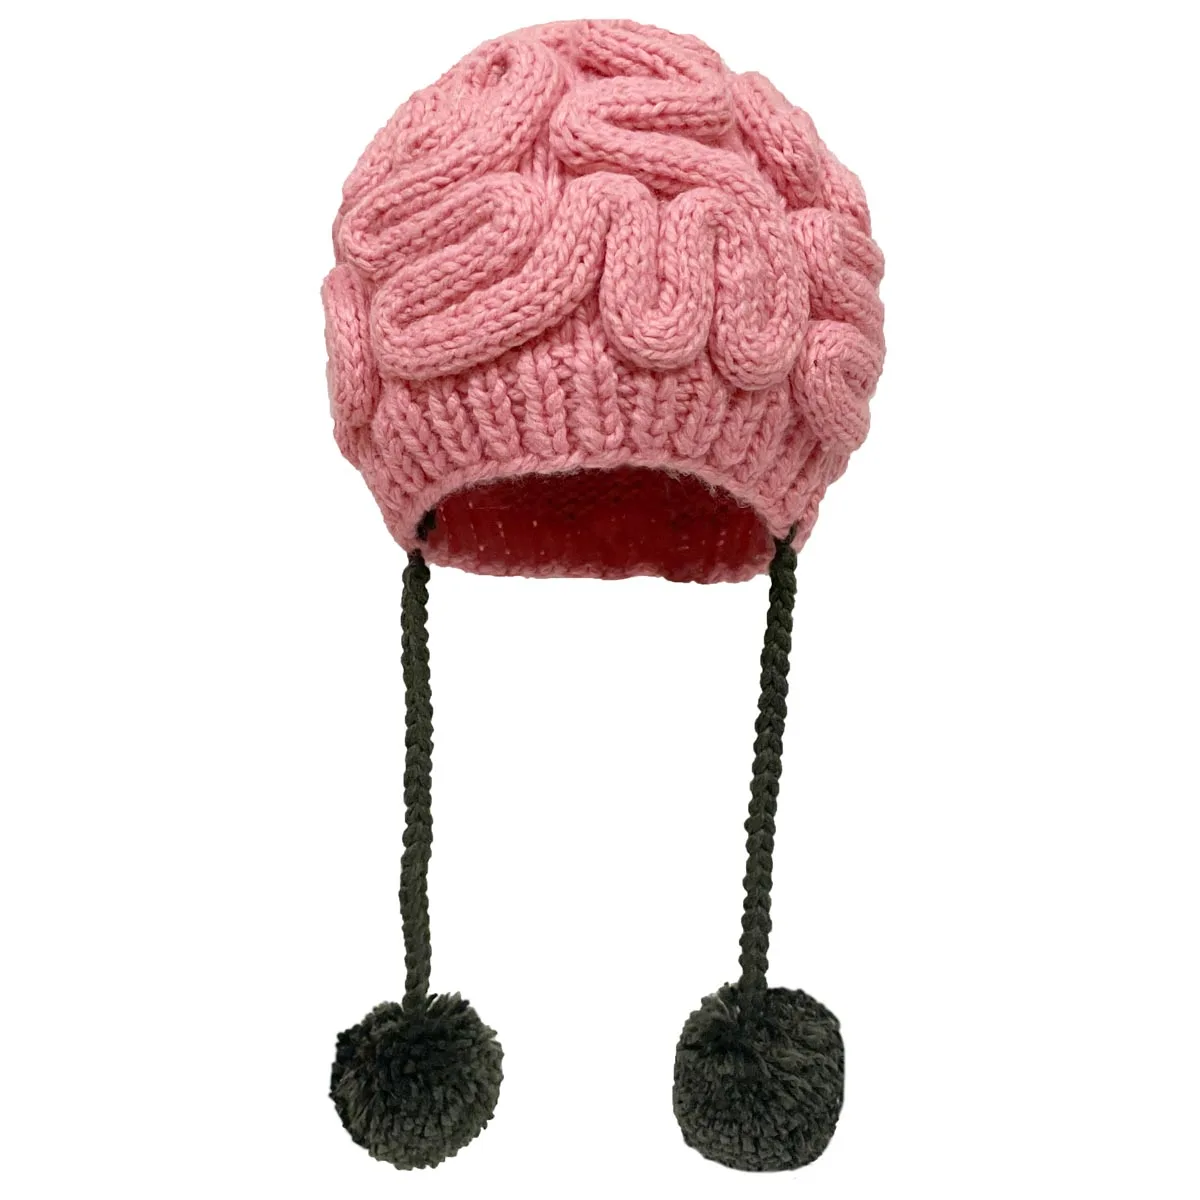 

BomHCS Handmade Crochet Funny Brain Hat Creative Knitted Beanie Hanging 2 Pom Balls Cap Unisex Pompom Winter Warm